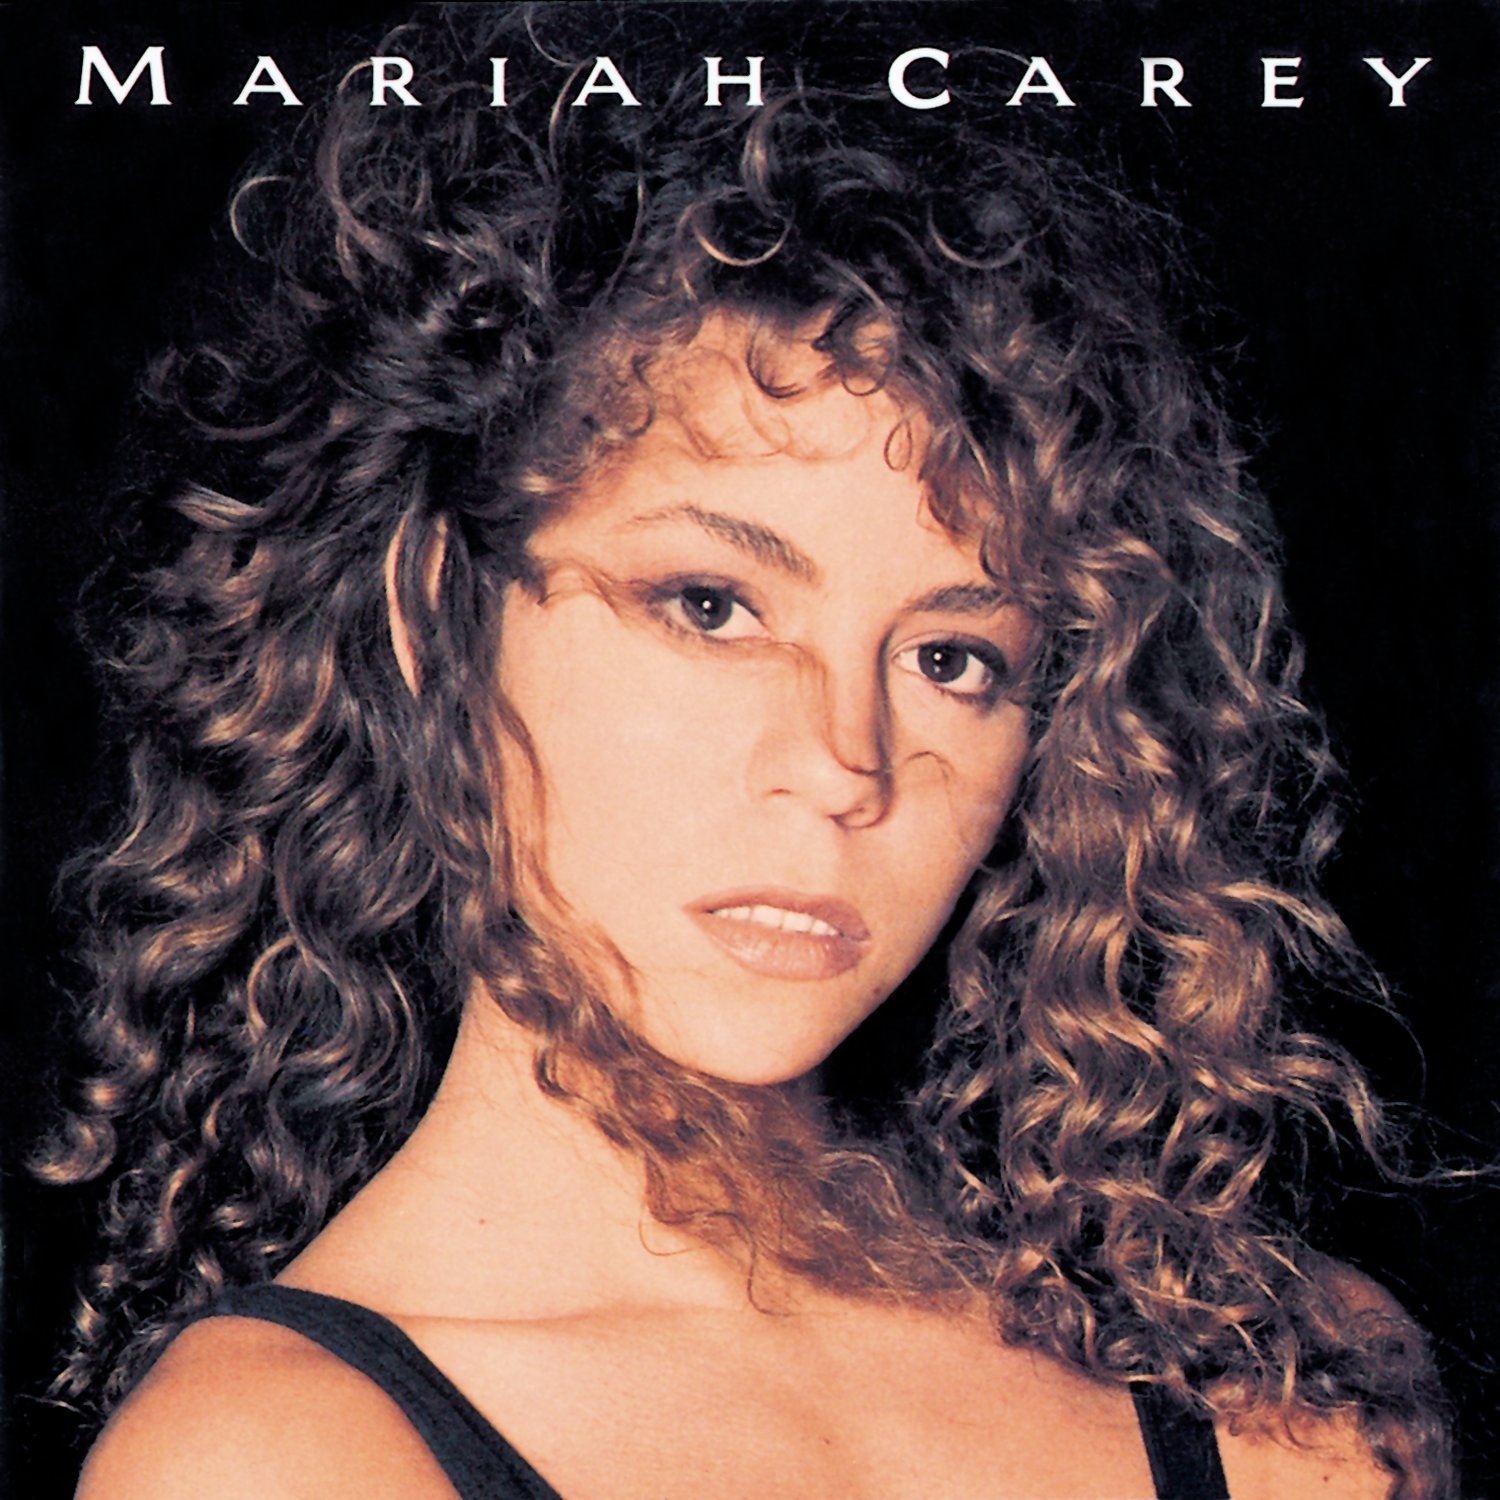 mariah carey full album